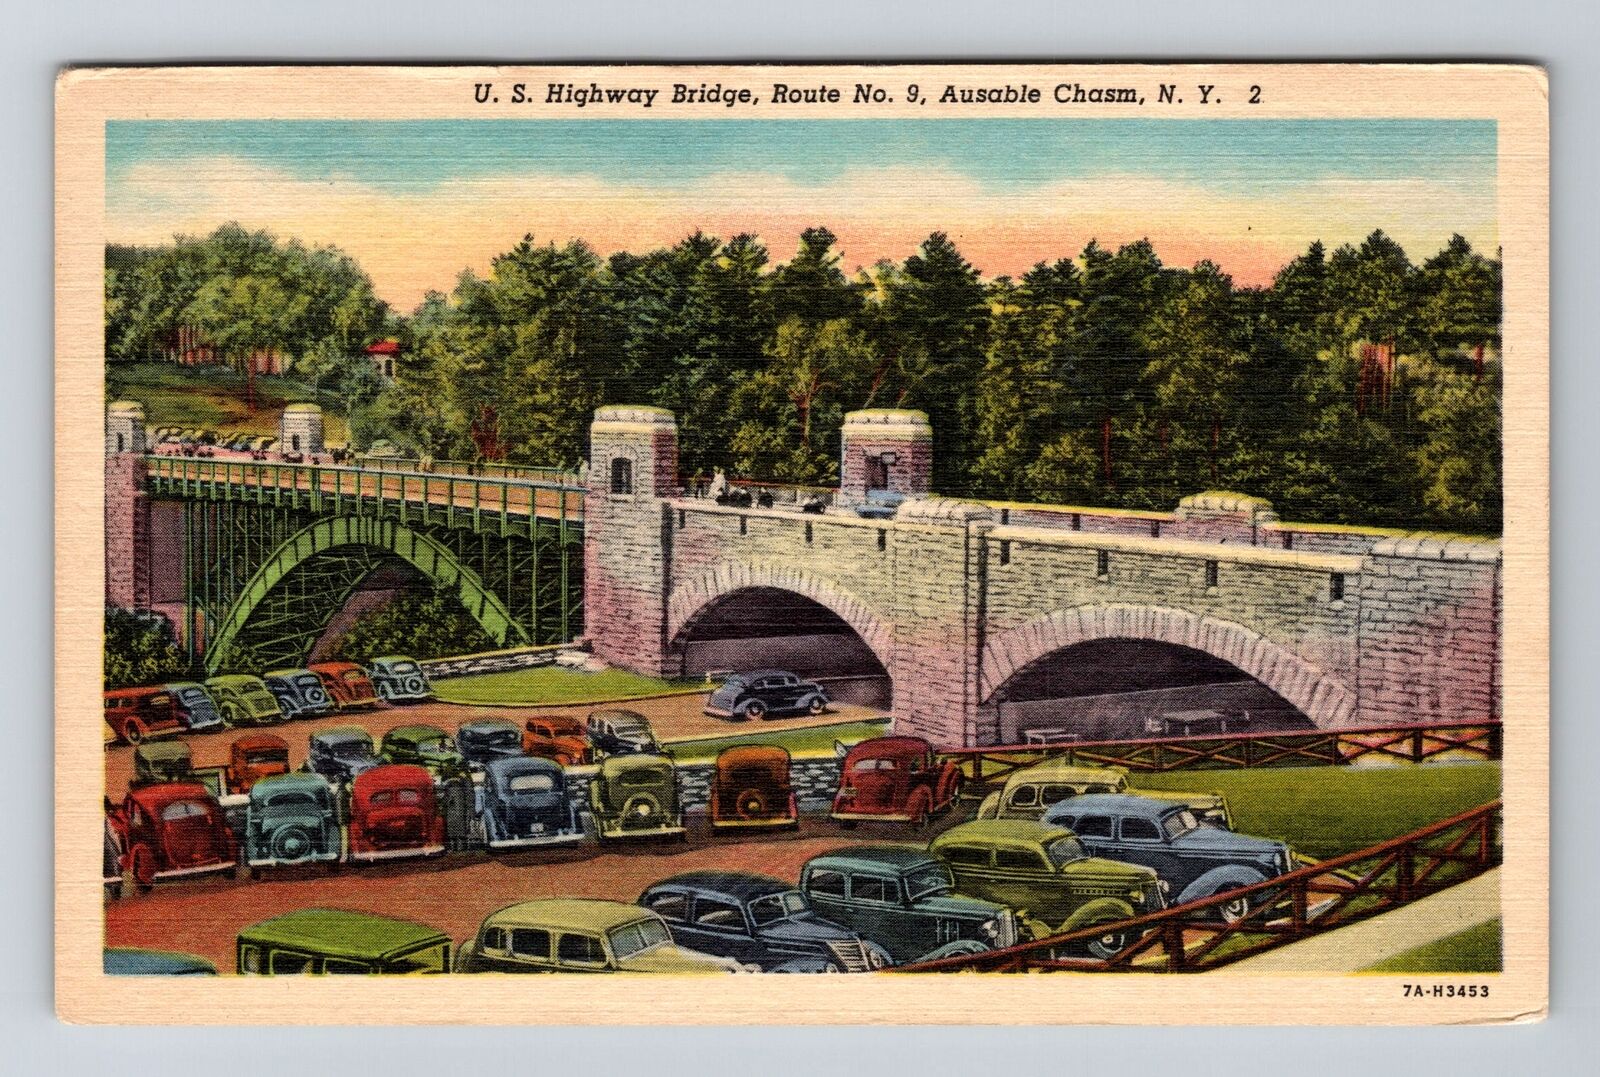 AuSable Chasm NY-New York, U.S. Hwy Bridge, Route 9 Vintage Souvenir Postcard